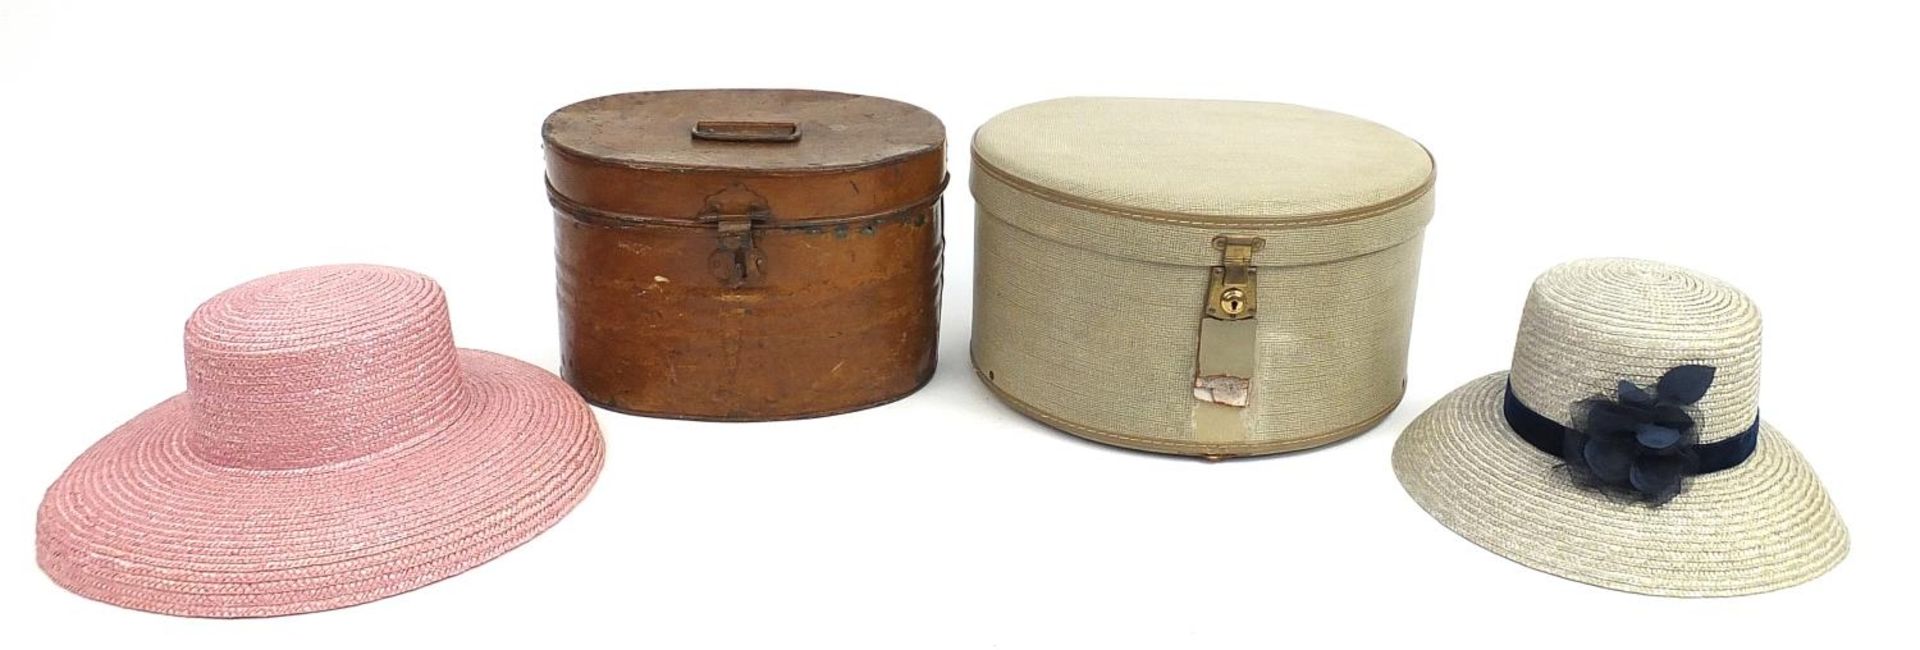 Victorian tin hat box, retro hat box and hats